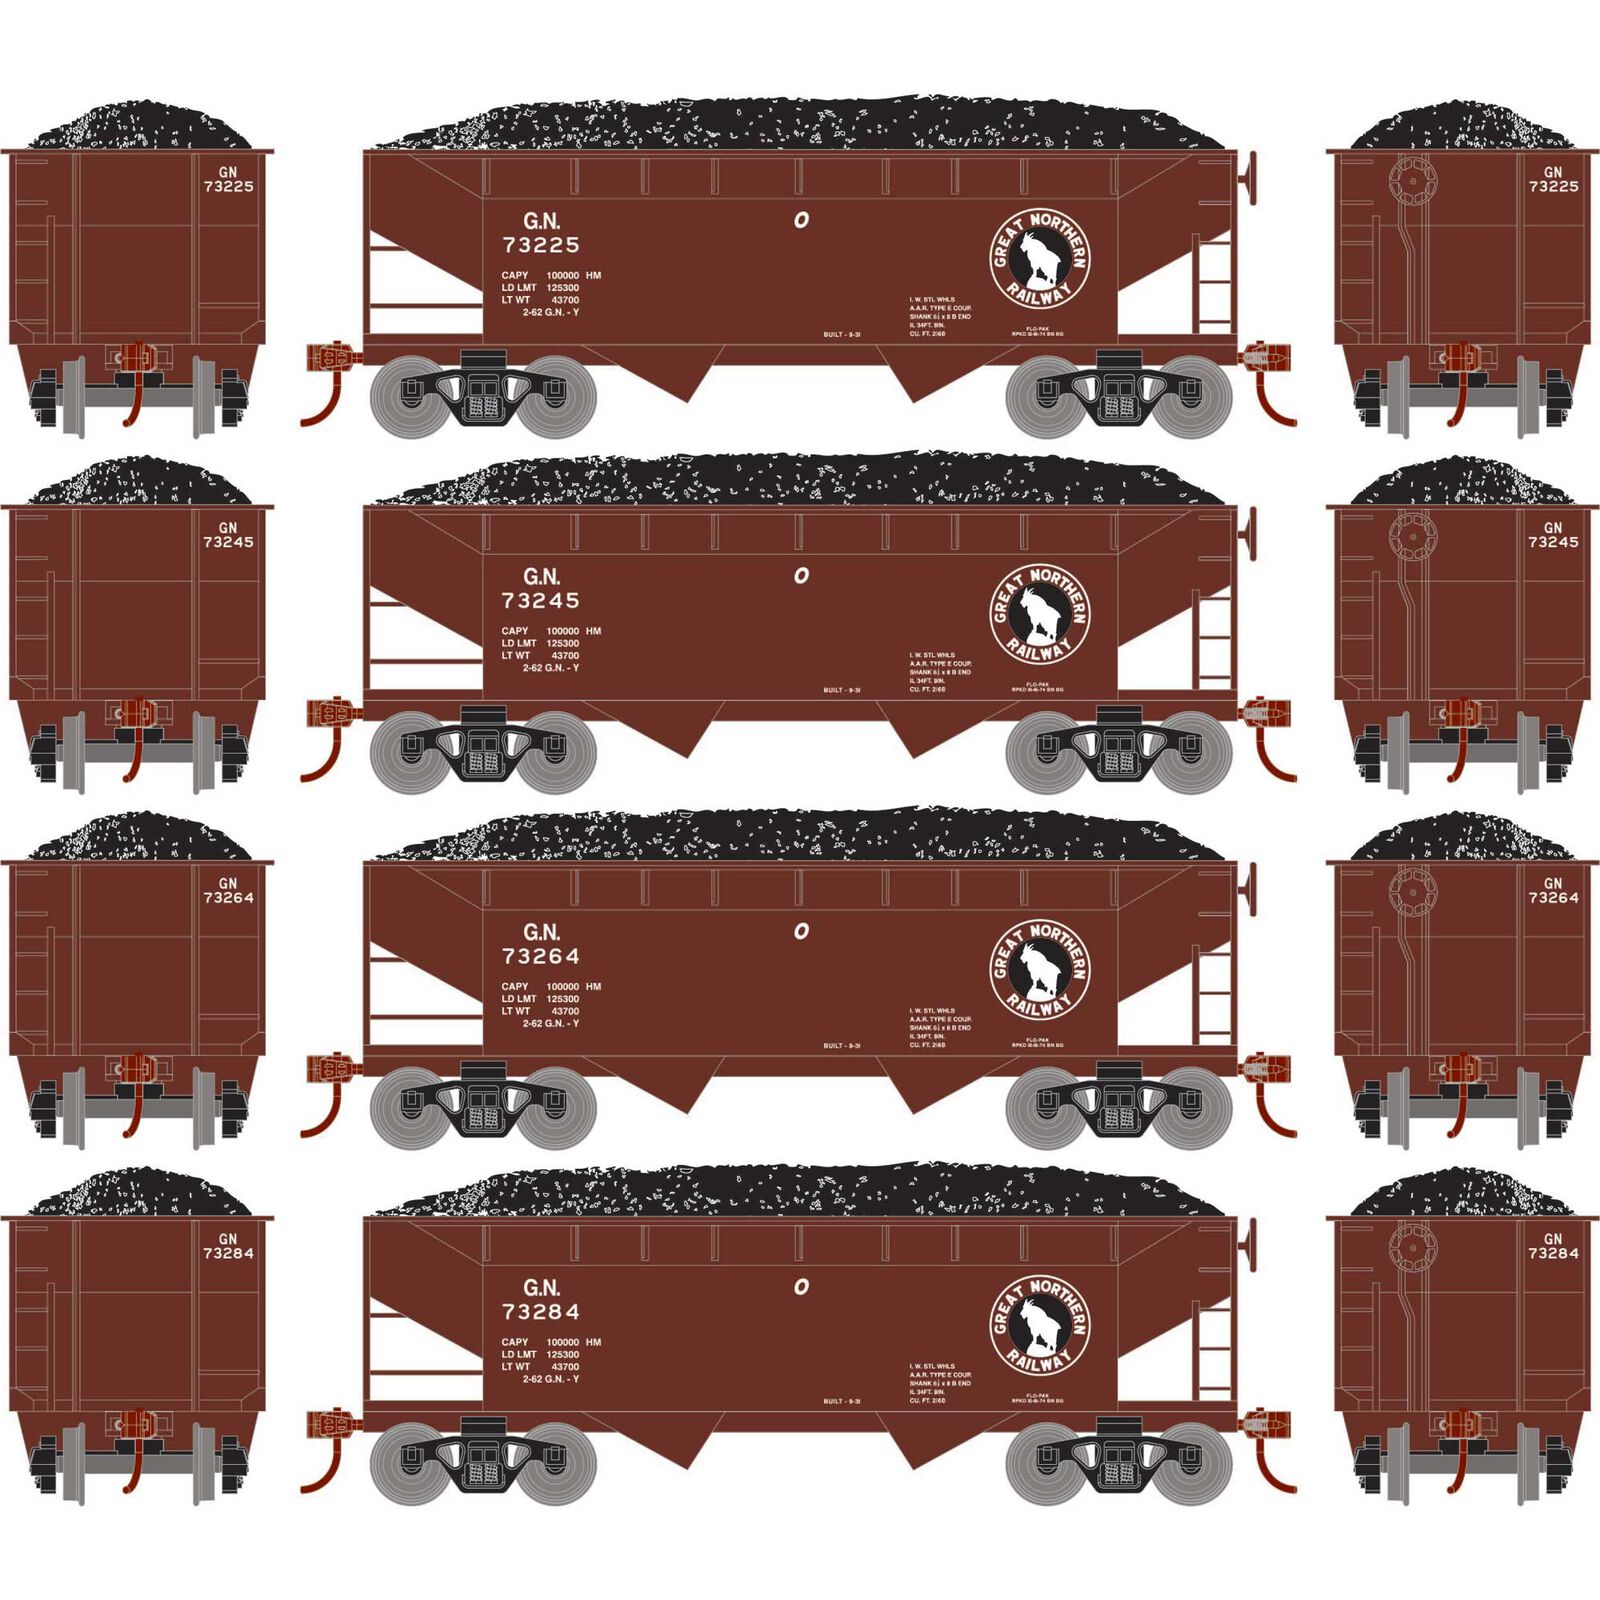 HO 34' 2-Bay Offset Hopper with Coal Load, GN #73225 / 73245 / 73264 / 73284 (4)